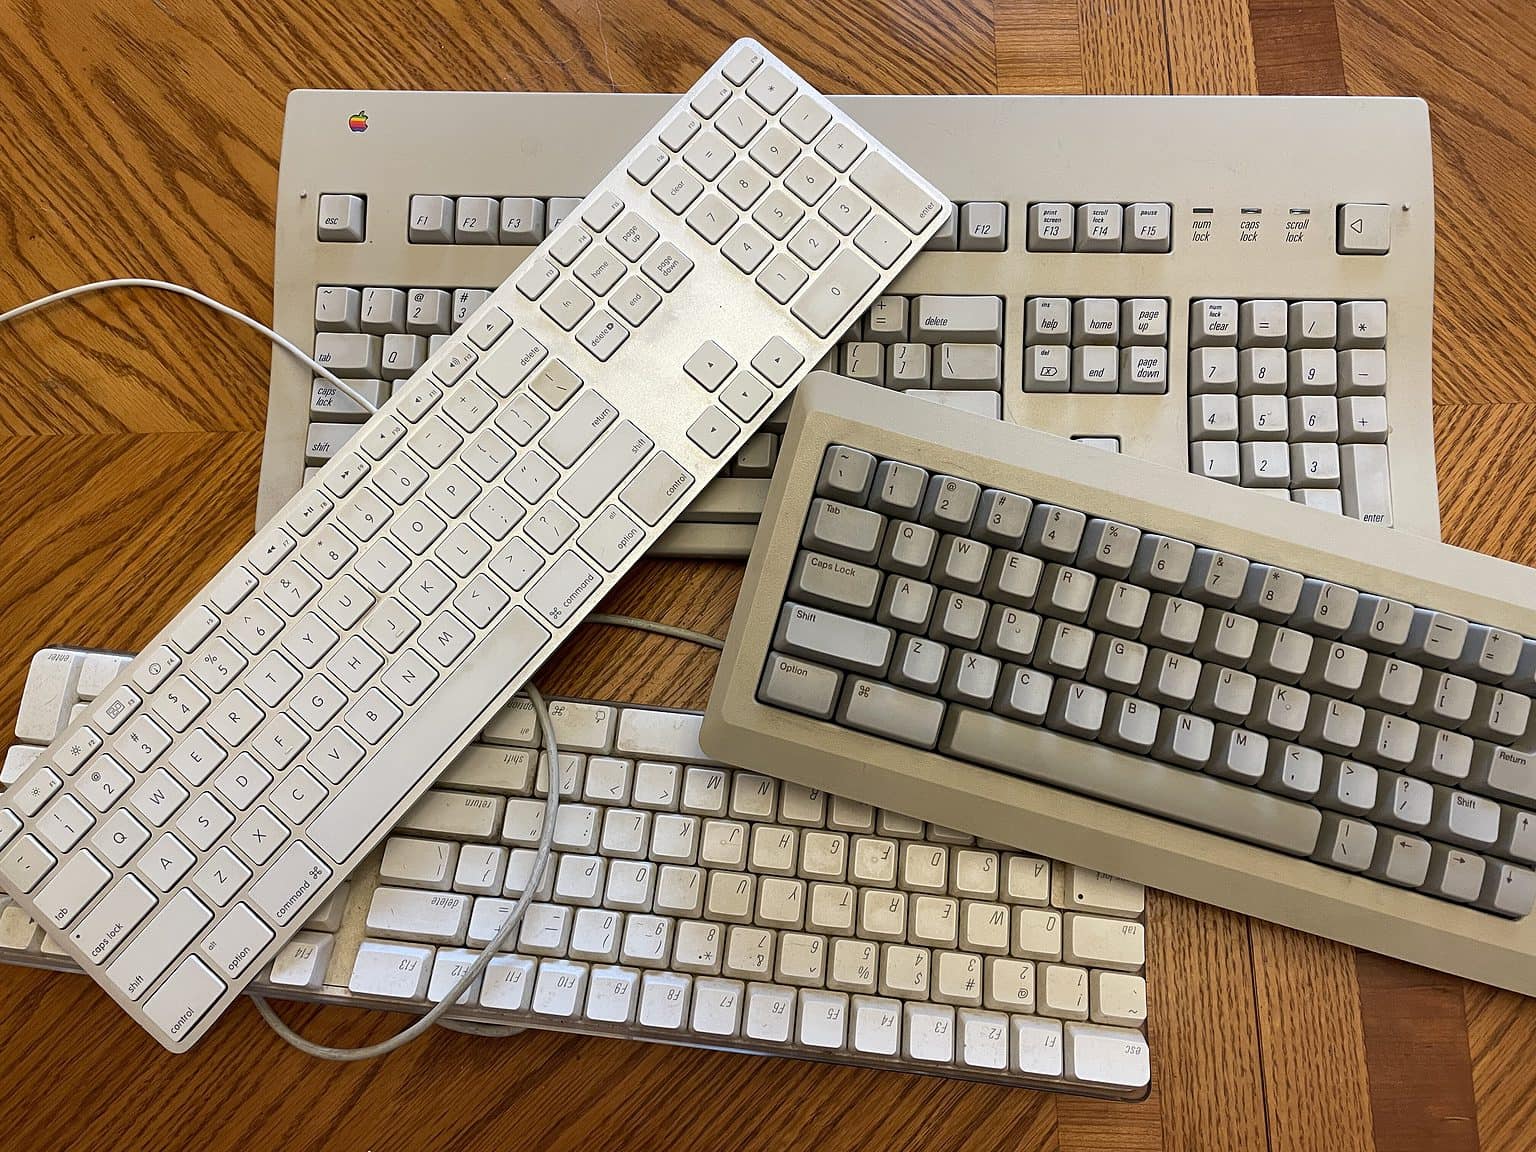 Mac keyboards in a pile.